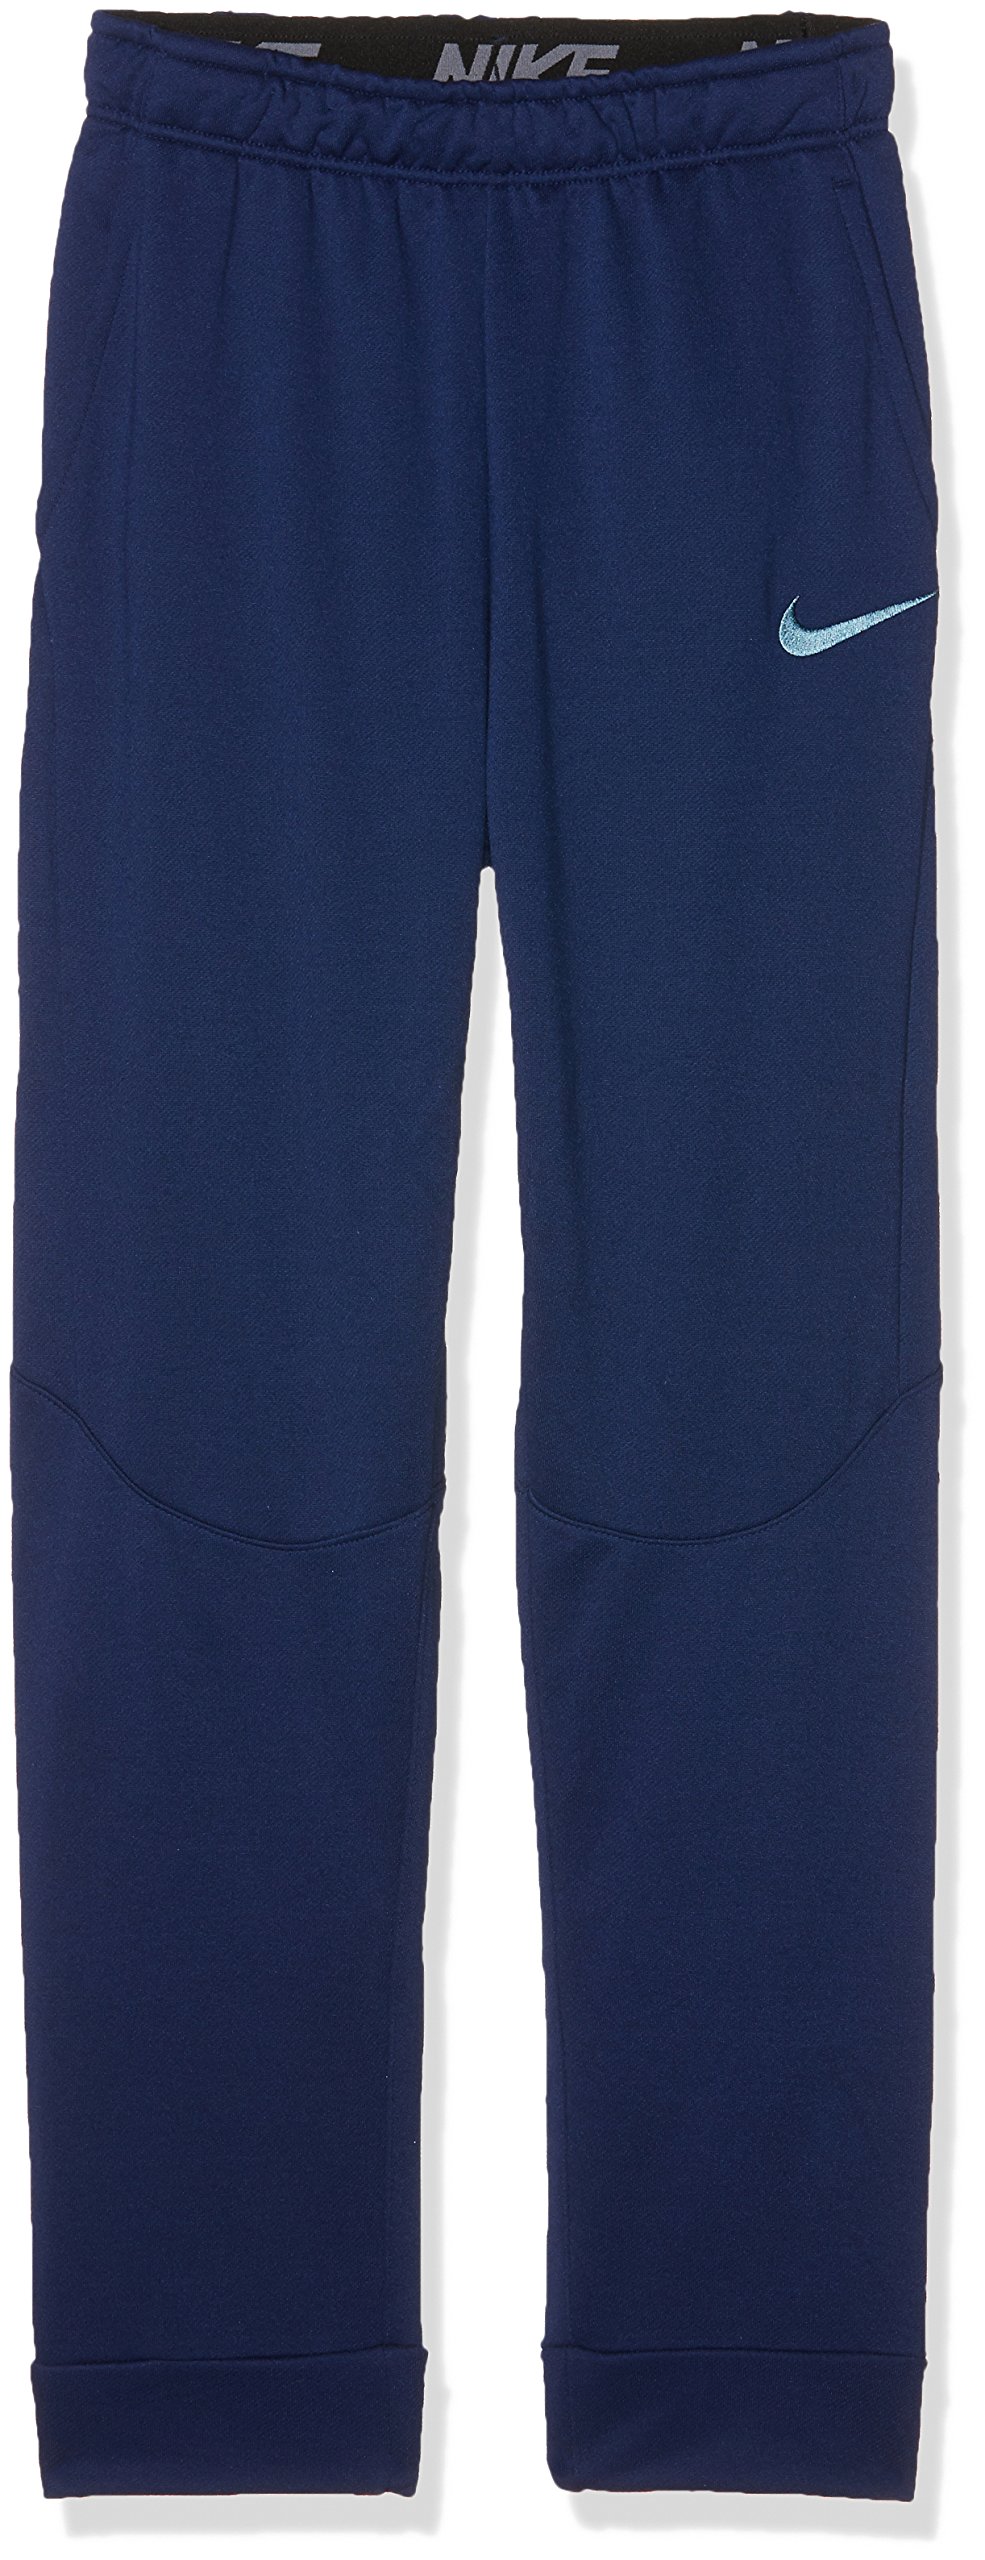 Mierda Manchuria Nota Pantalon nike Dry Taper azul junior | LiderSport